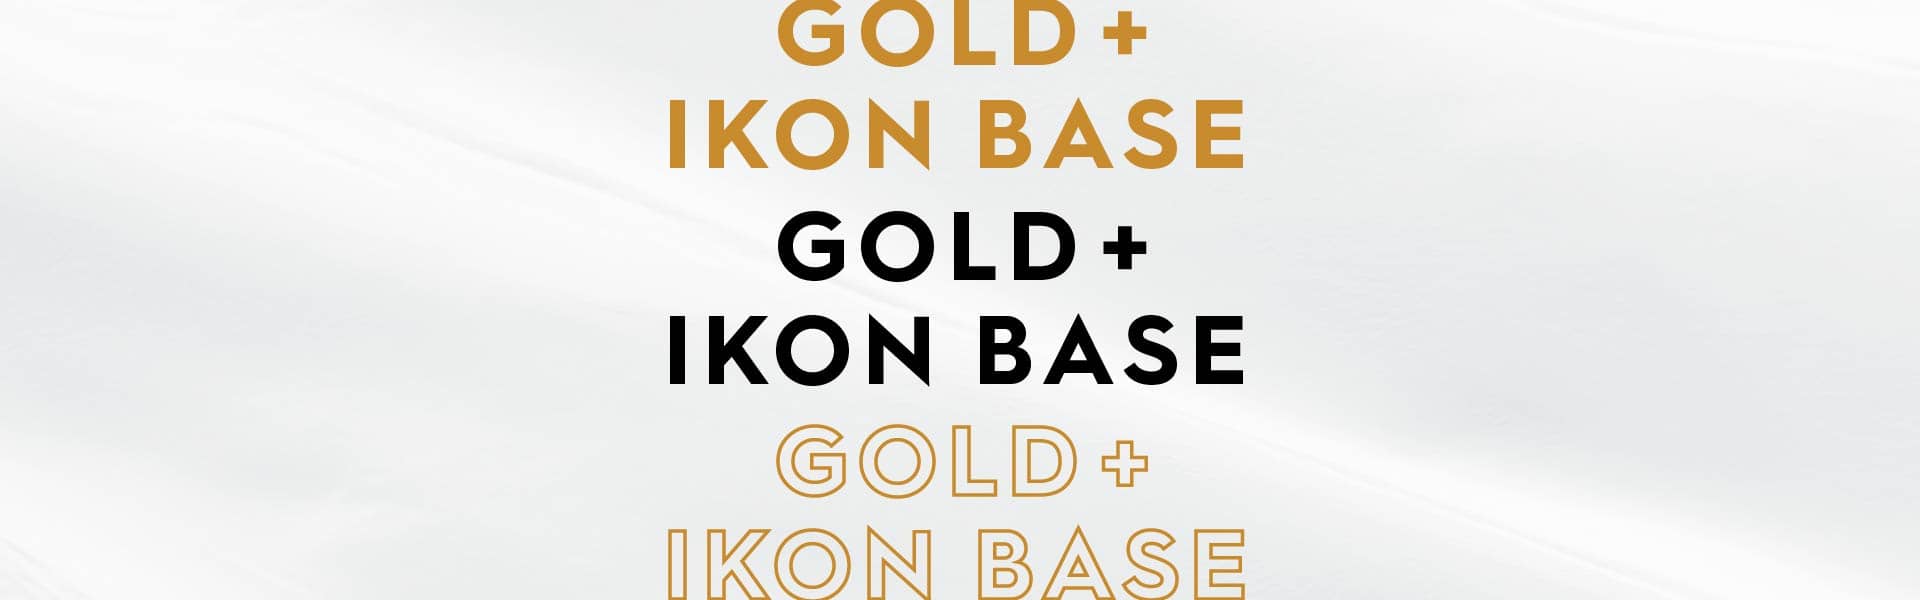 Gold + Ikon Base Pass Image